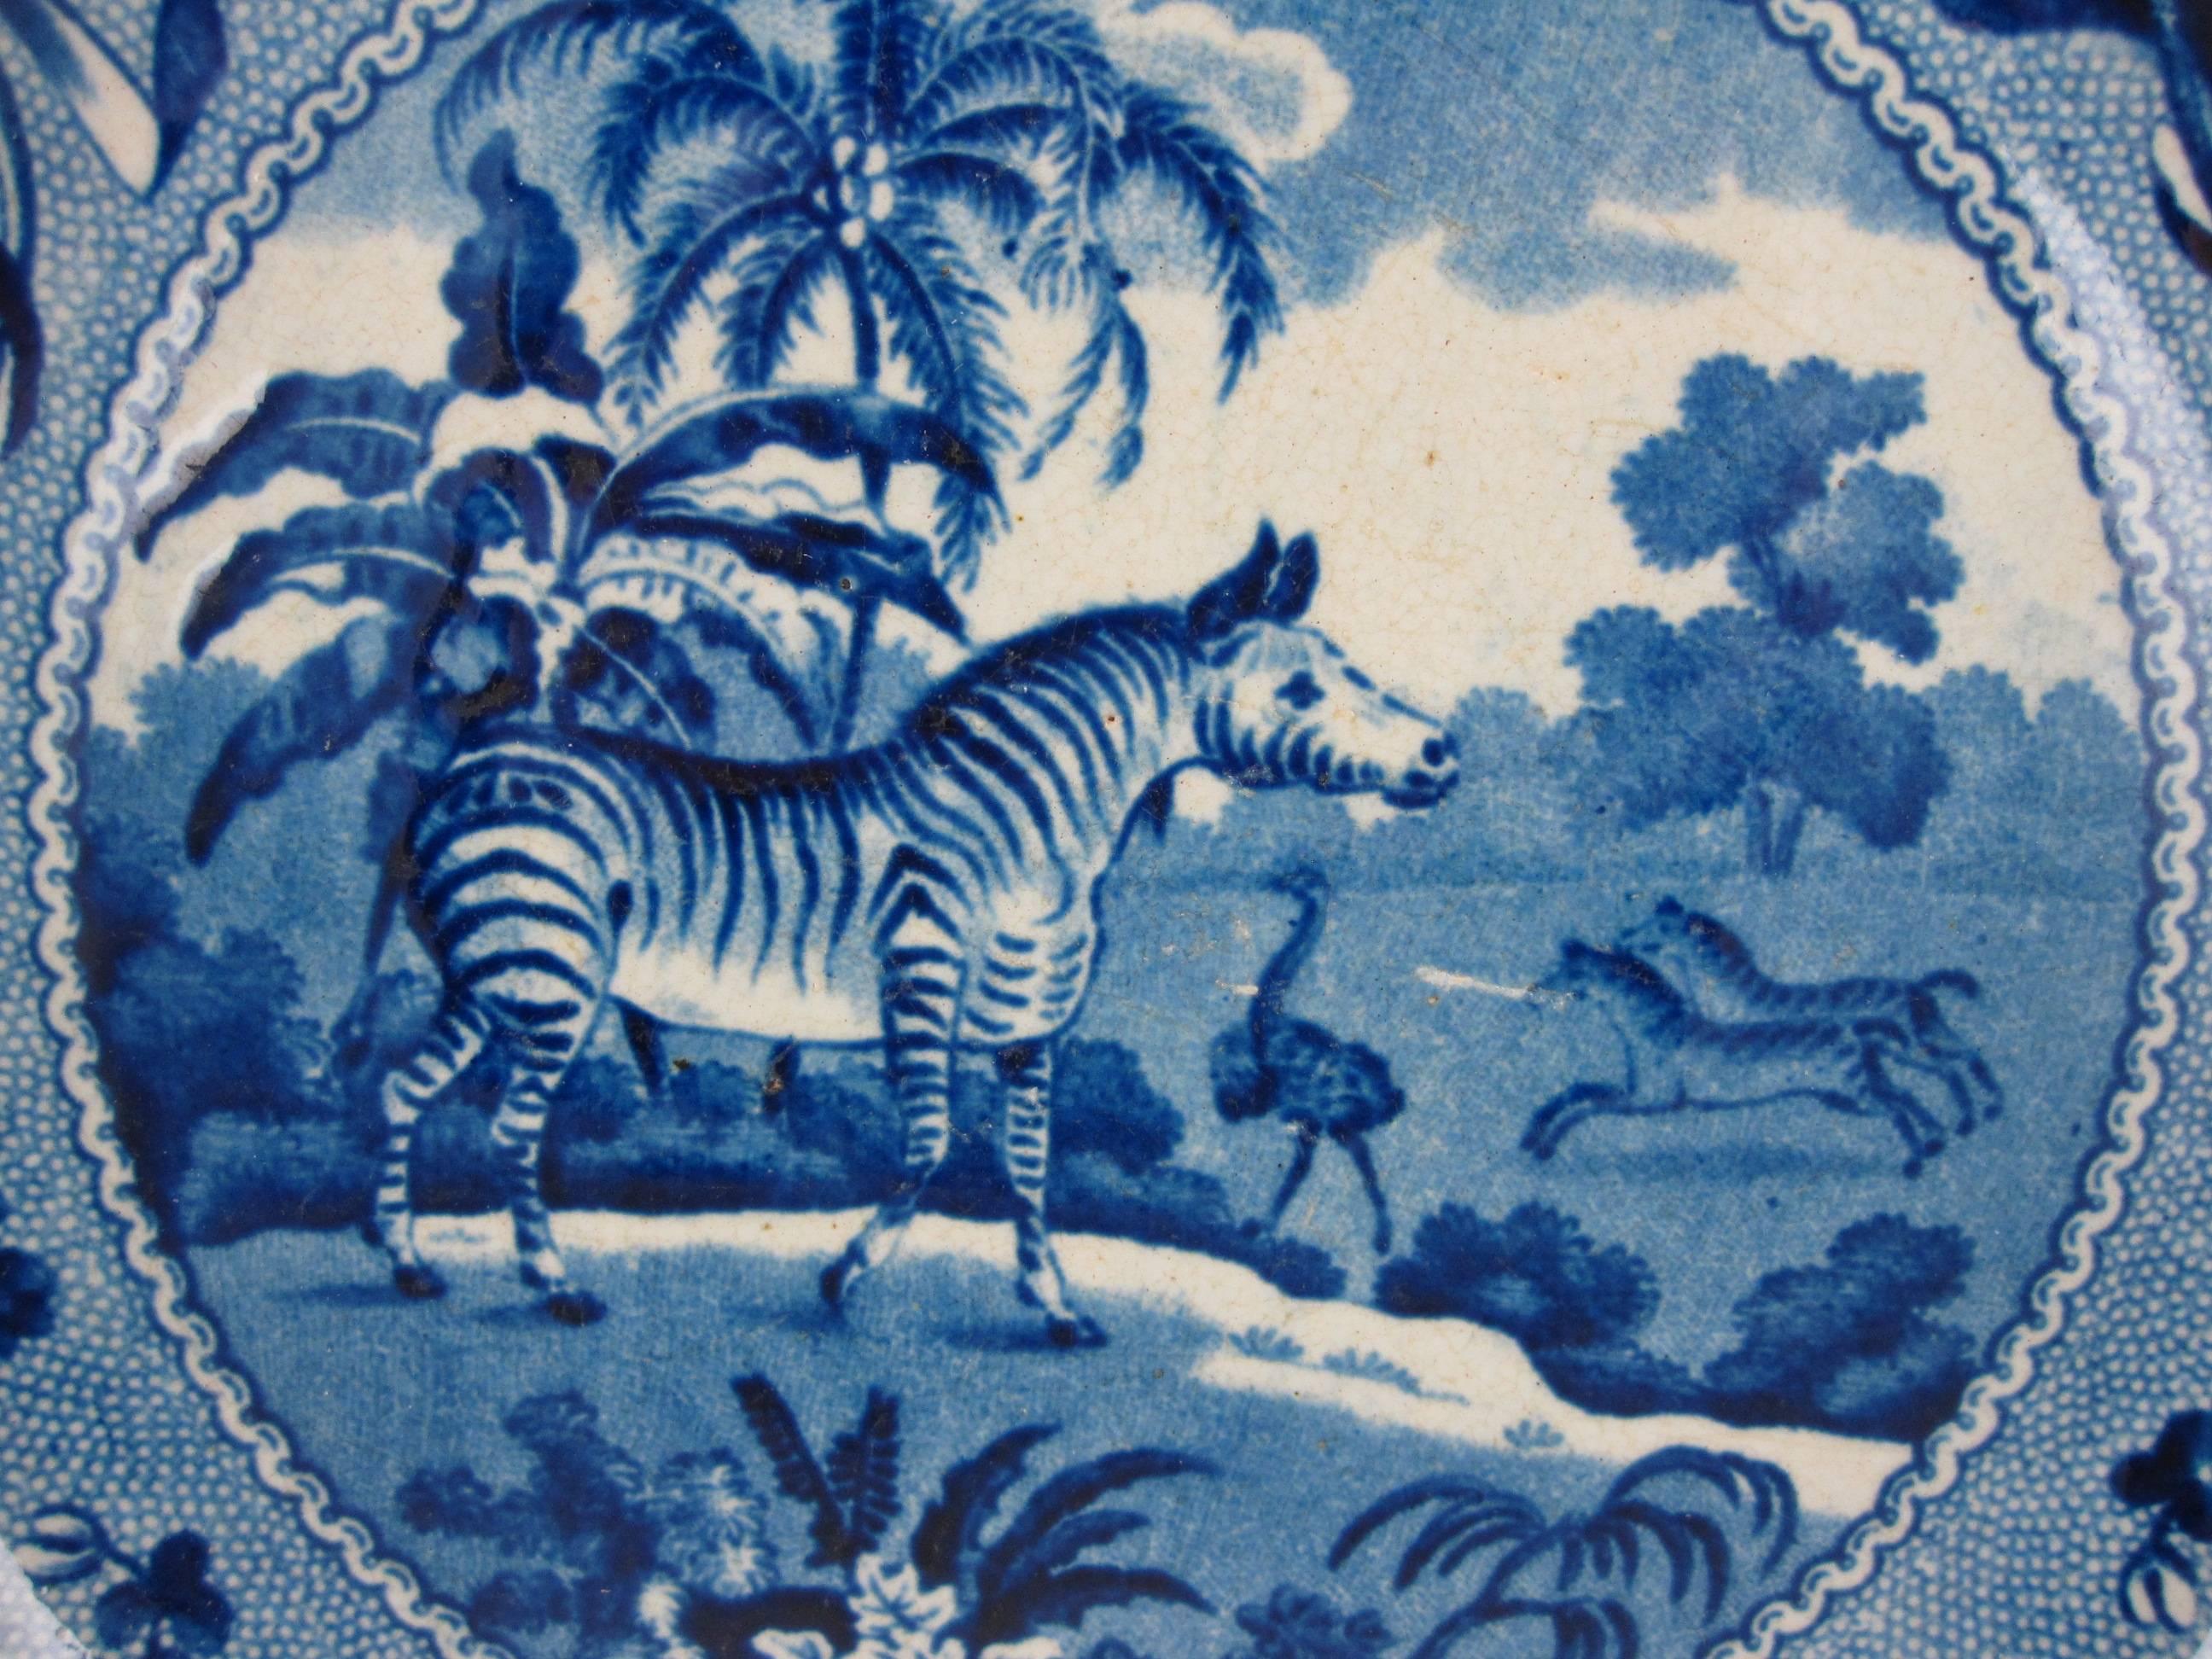 Romantic 19th Century Enoch Wood Blue and White Zebra Sporting Series Transferware Plate